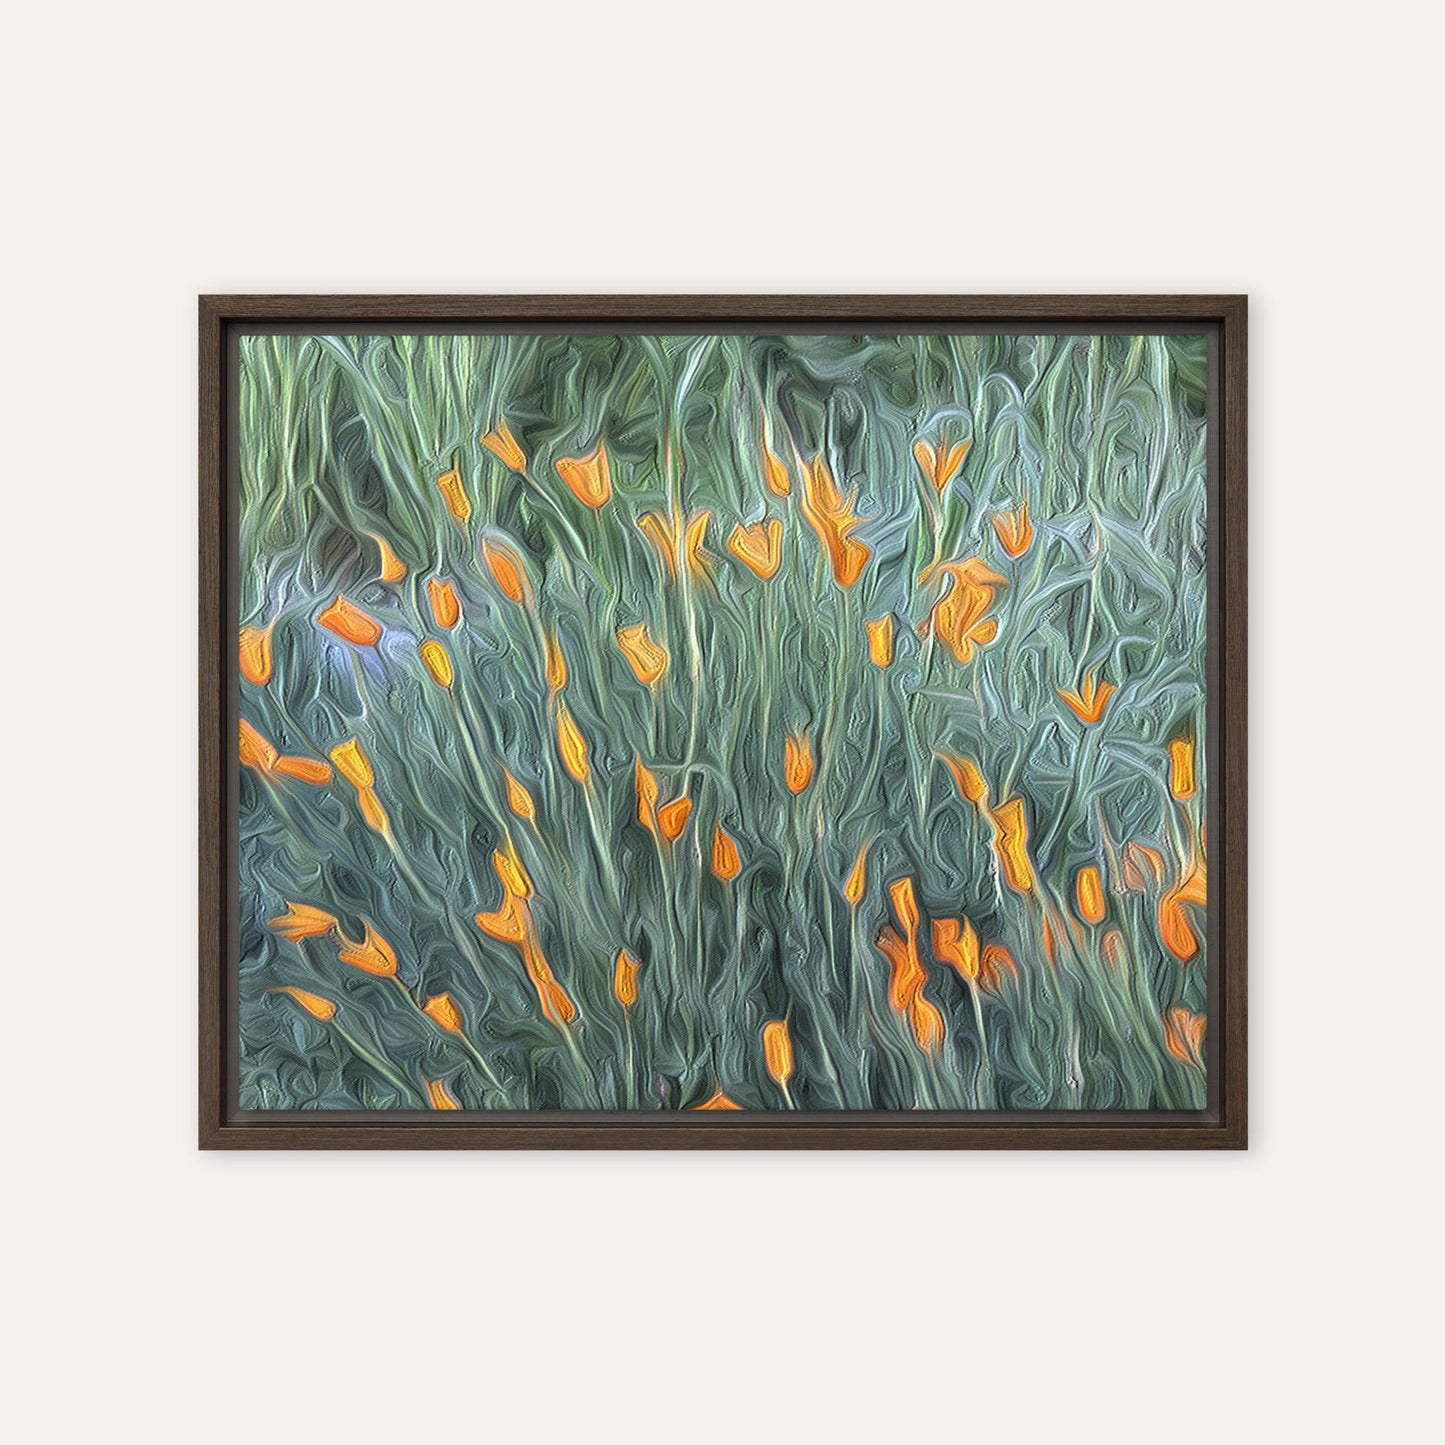 California Poppies Framed Print